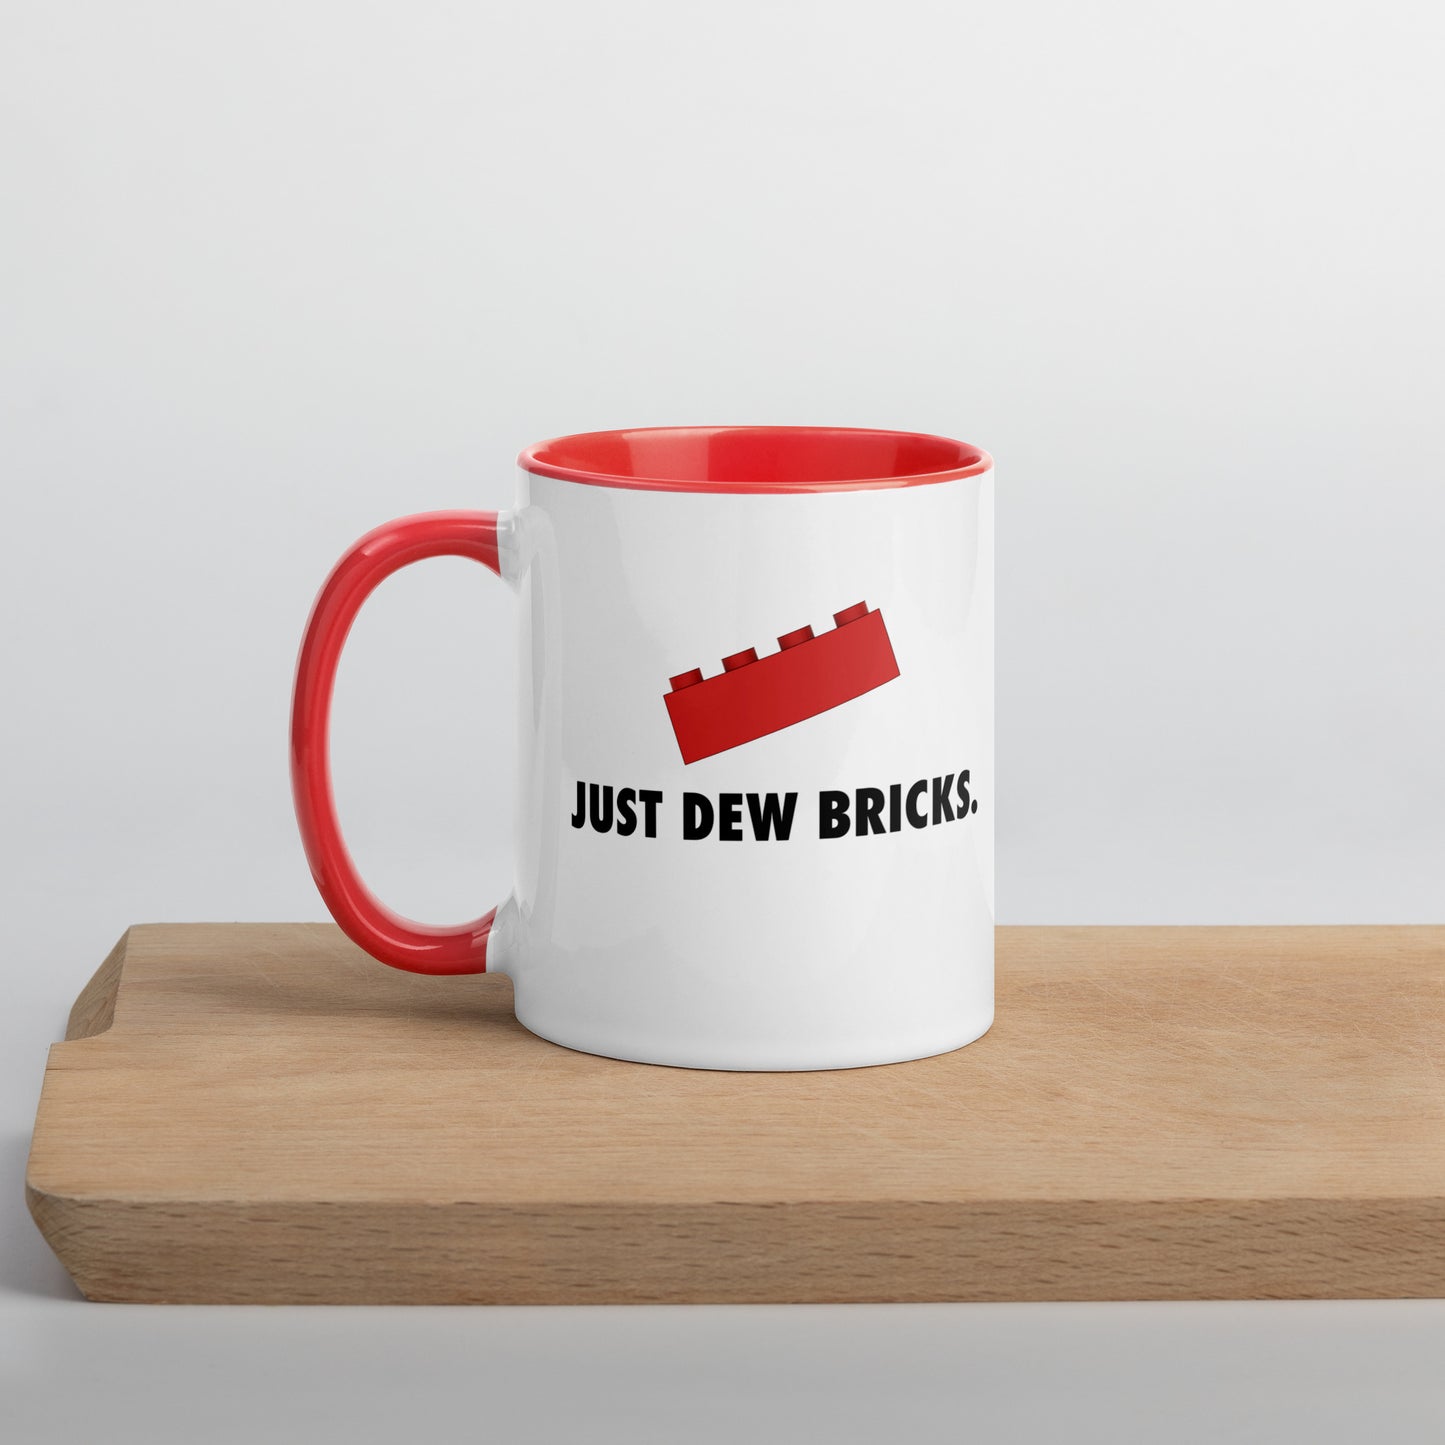 Dew Bricks Mug with Color Inside